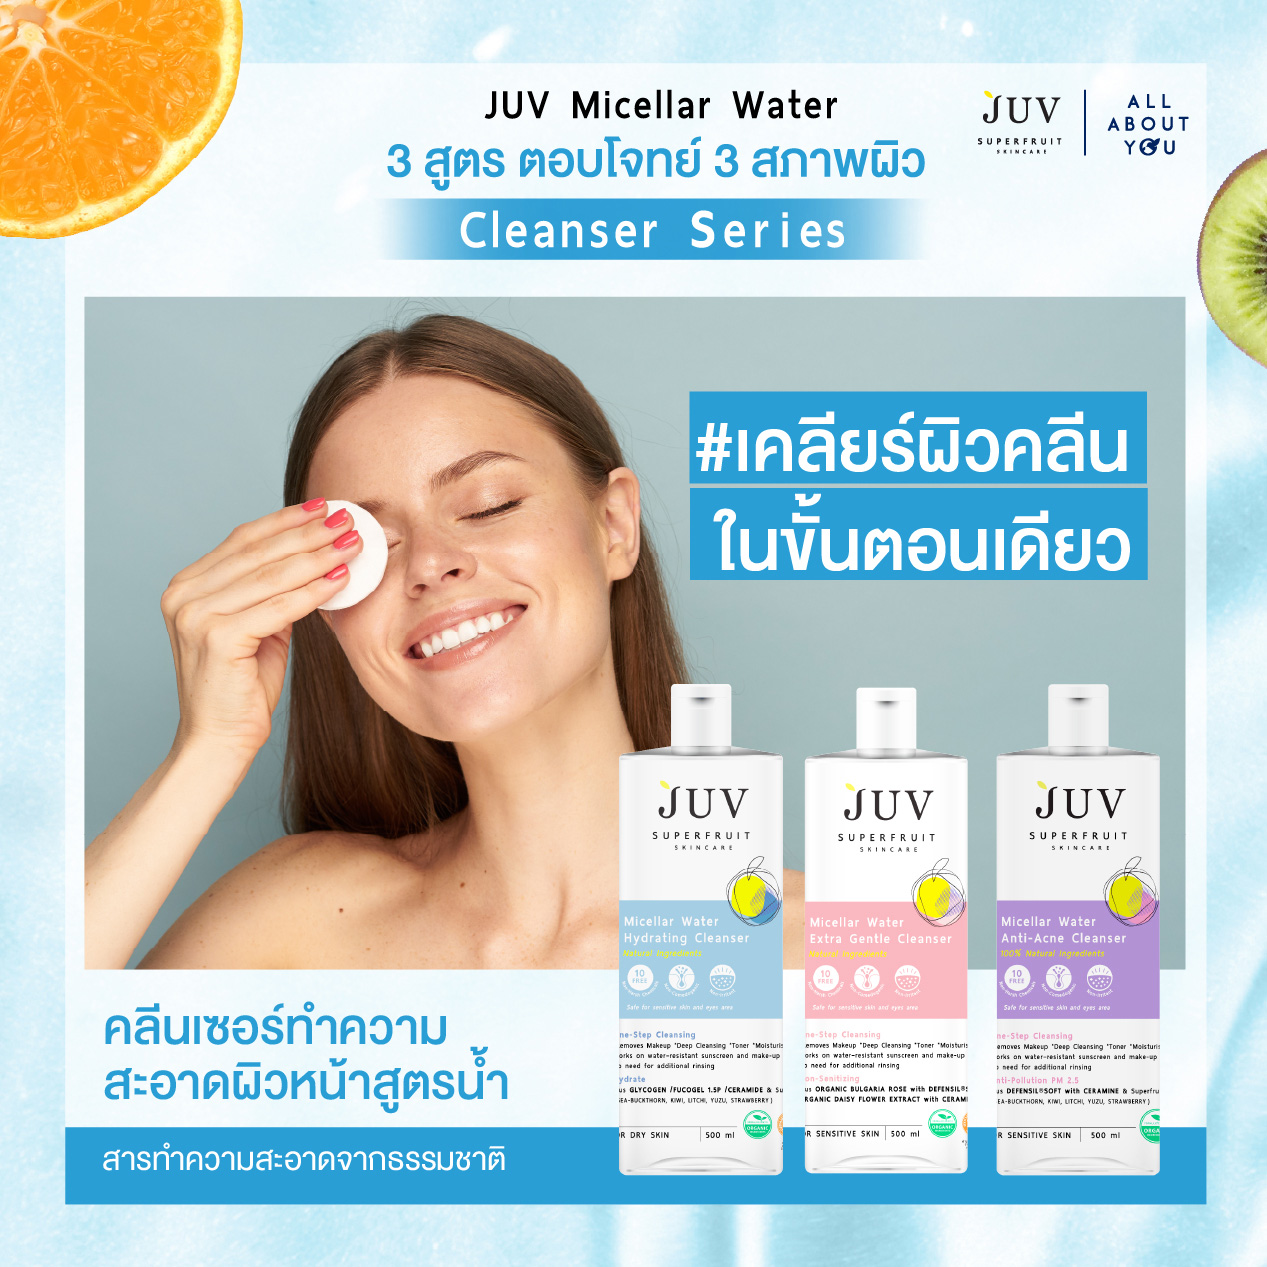 NEW ไอเทมคู่ปรับเมคอัพ JUV Micellar Water Cleanser Series 3 สูตร ตอบโจทย์ 3 สภาพผิว เคลียร์ผิวคลีนในขั้นตอนเดียว